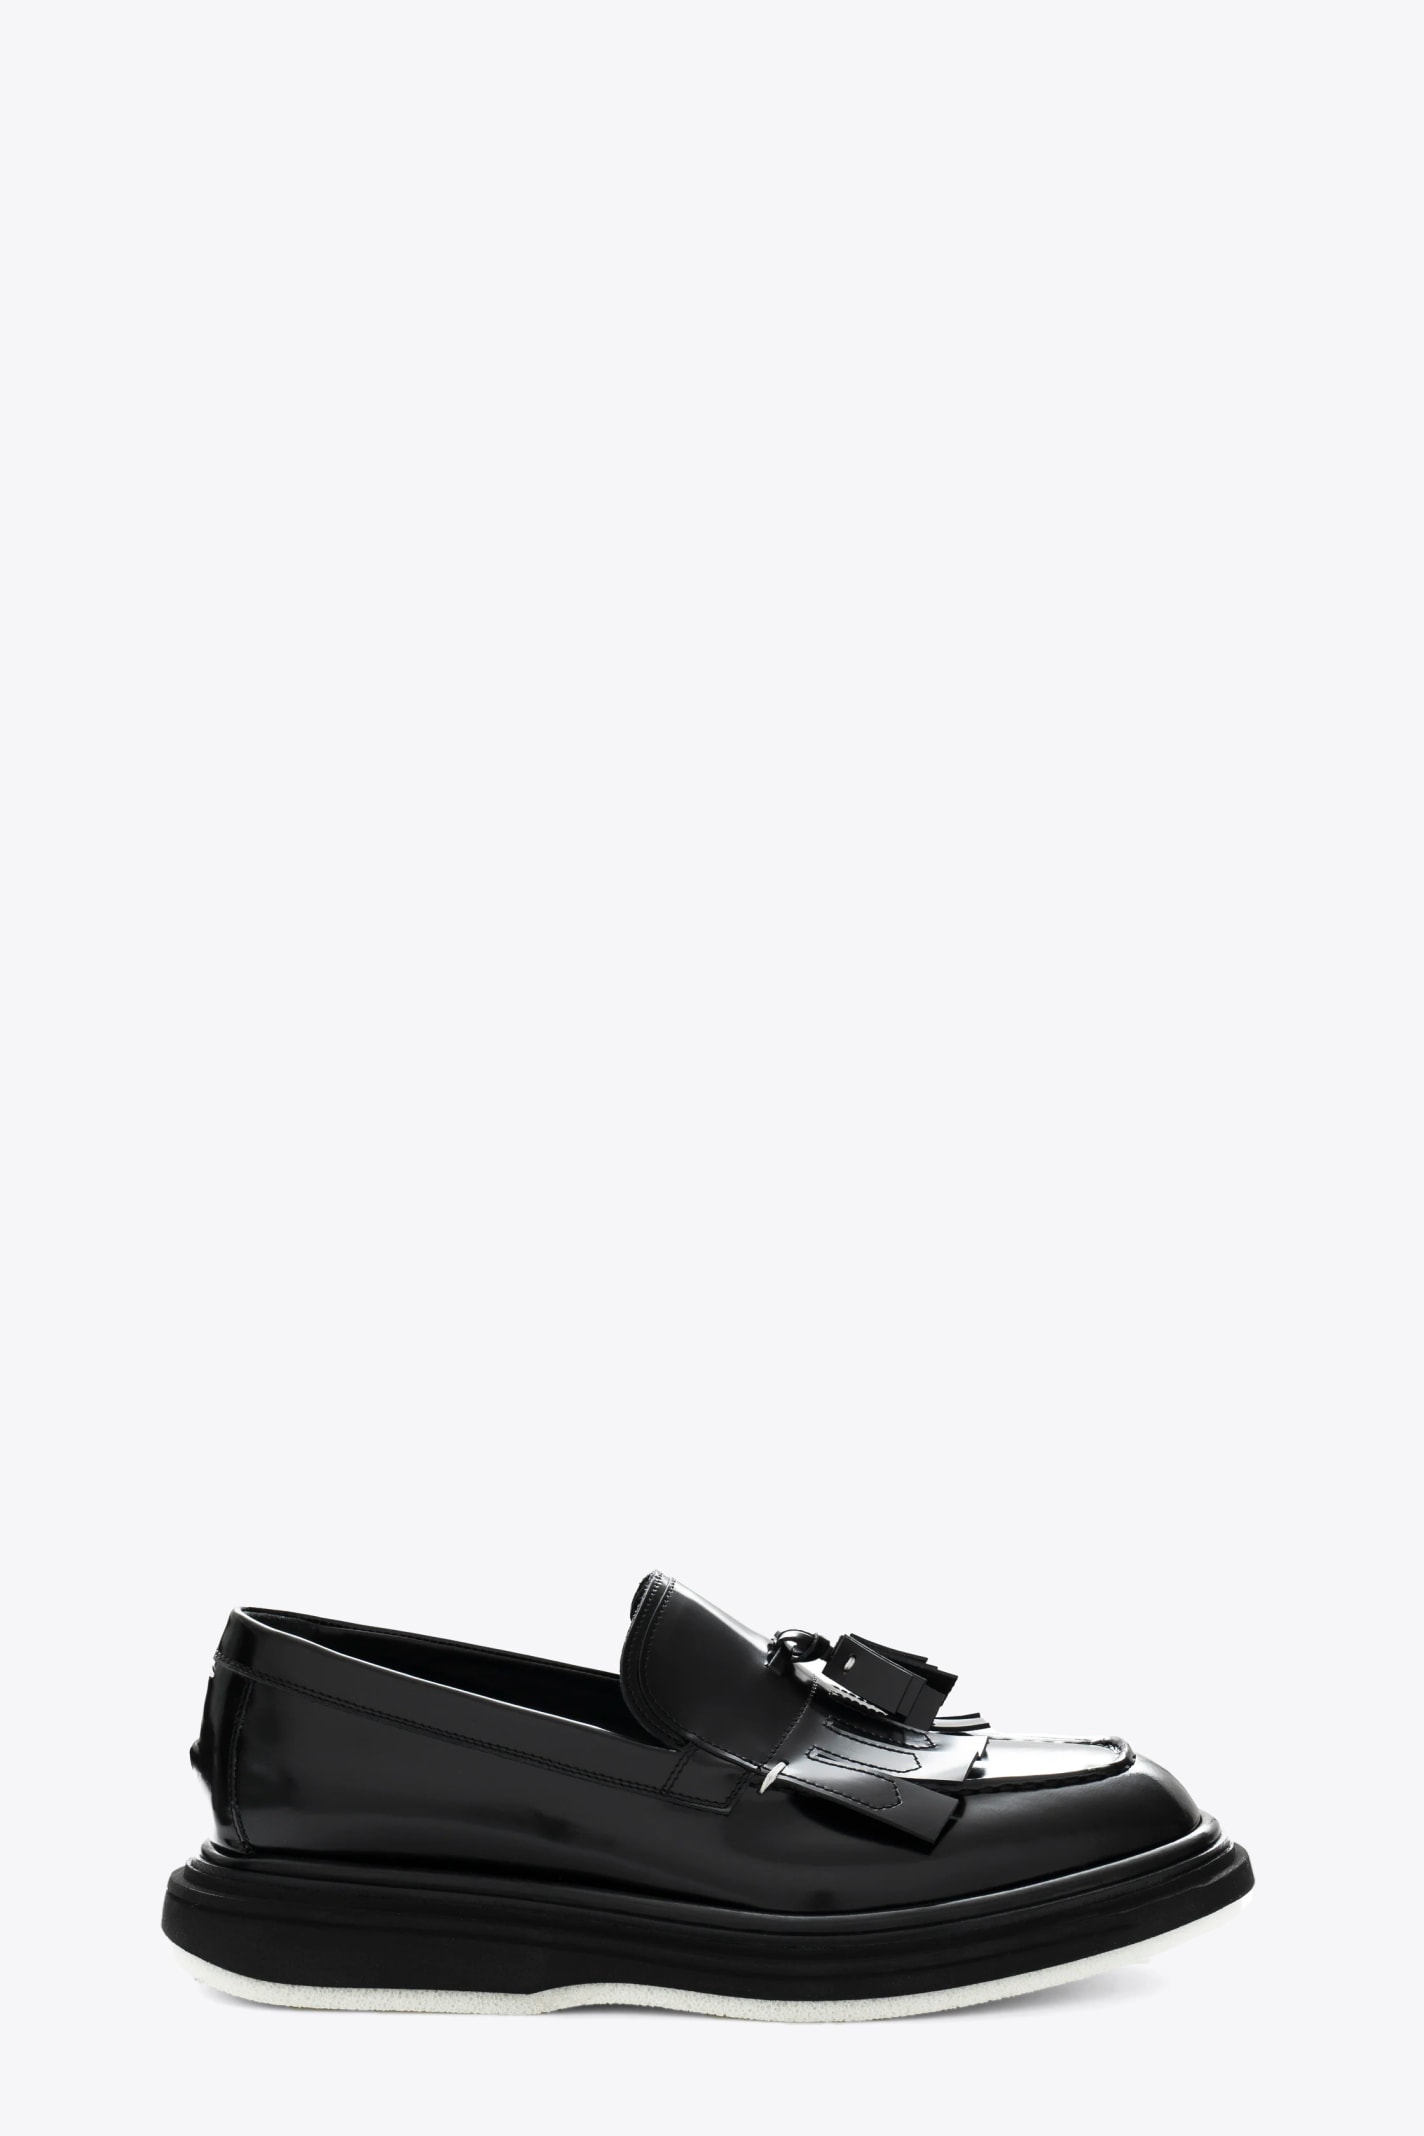 Mocassino In Pelle Di Vitello Abrasivato Black polished leather kilted loafer - Rob 458